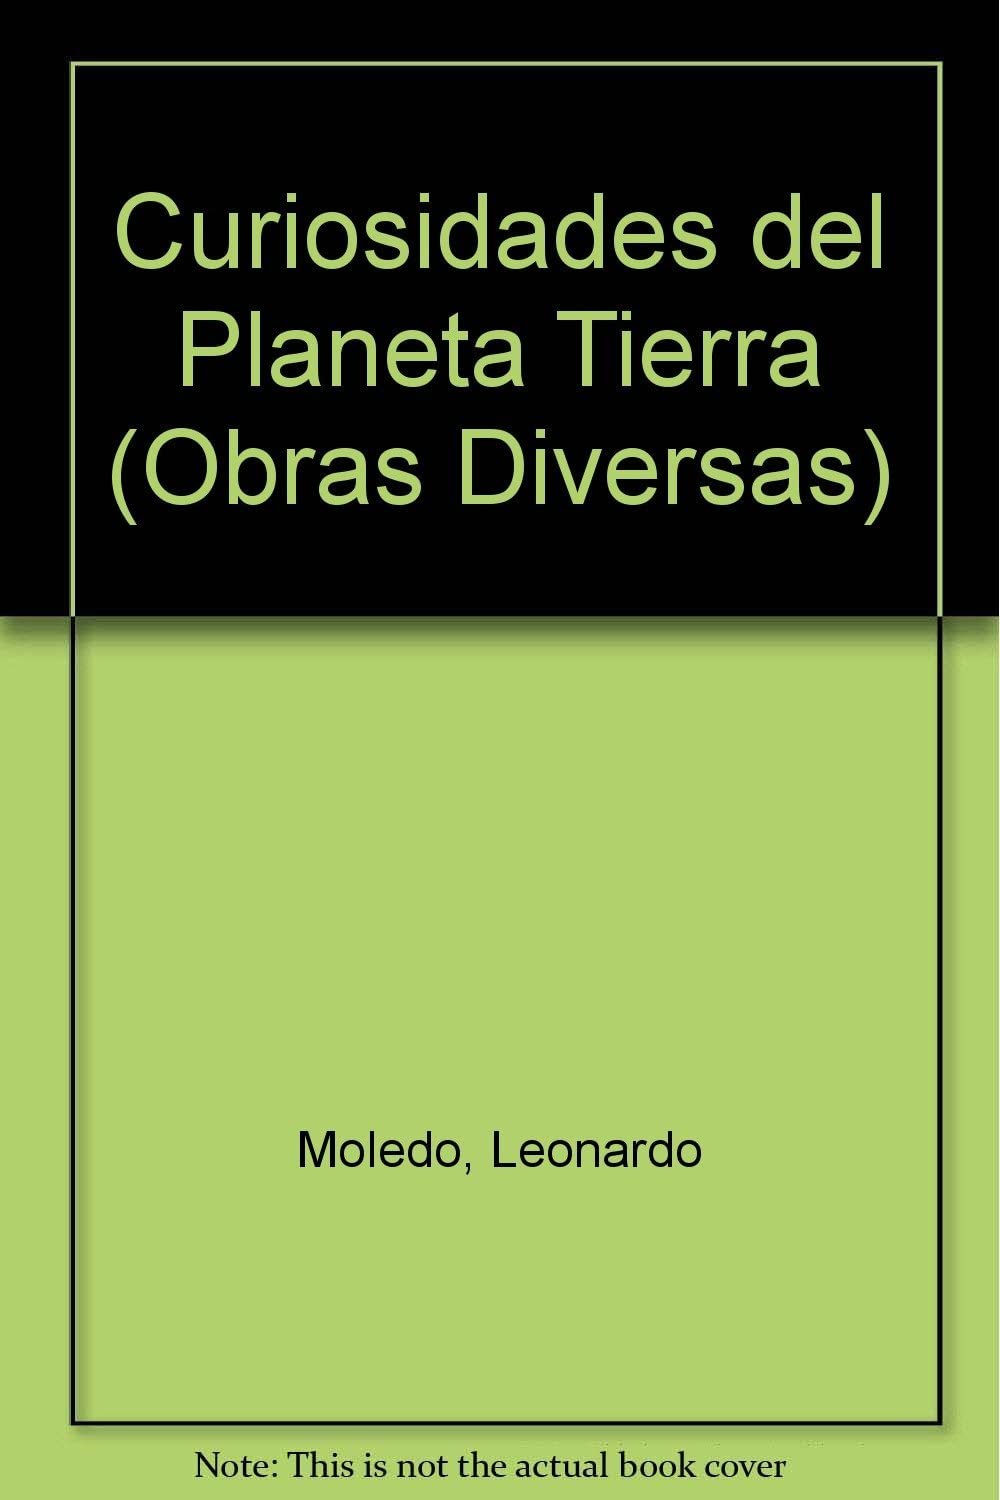 Curiosidades planeta tierra / Curiosities Planet Earth (Obras Diversas) (Spanish Edition)